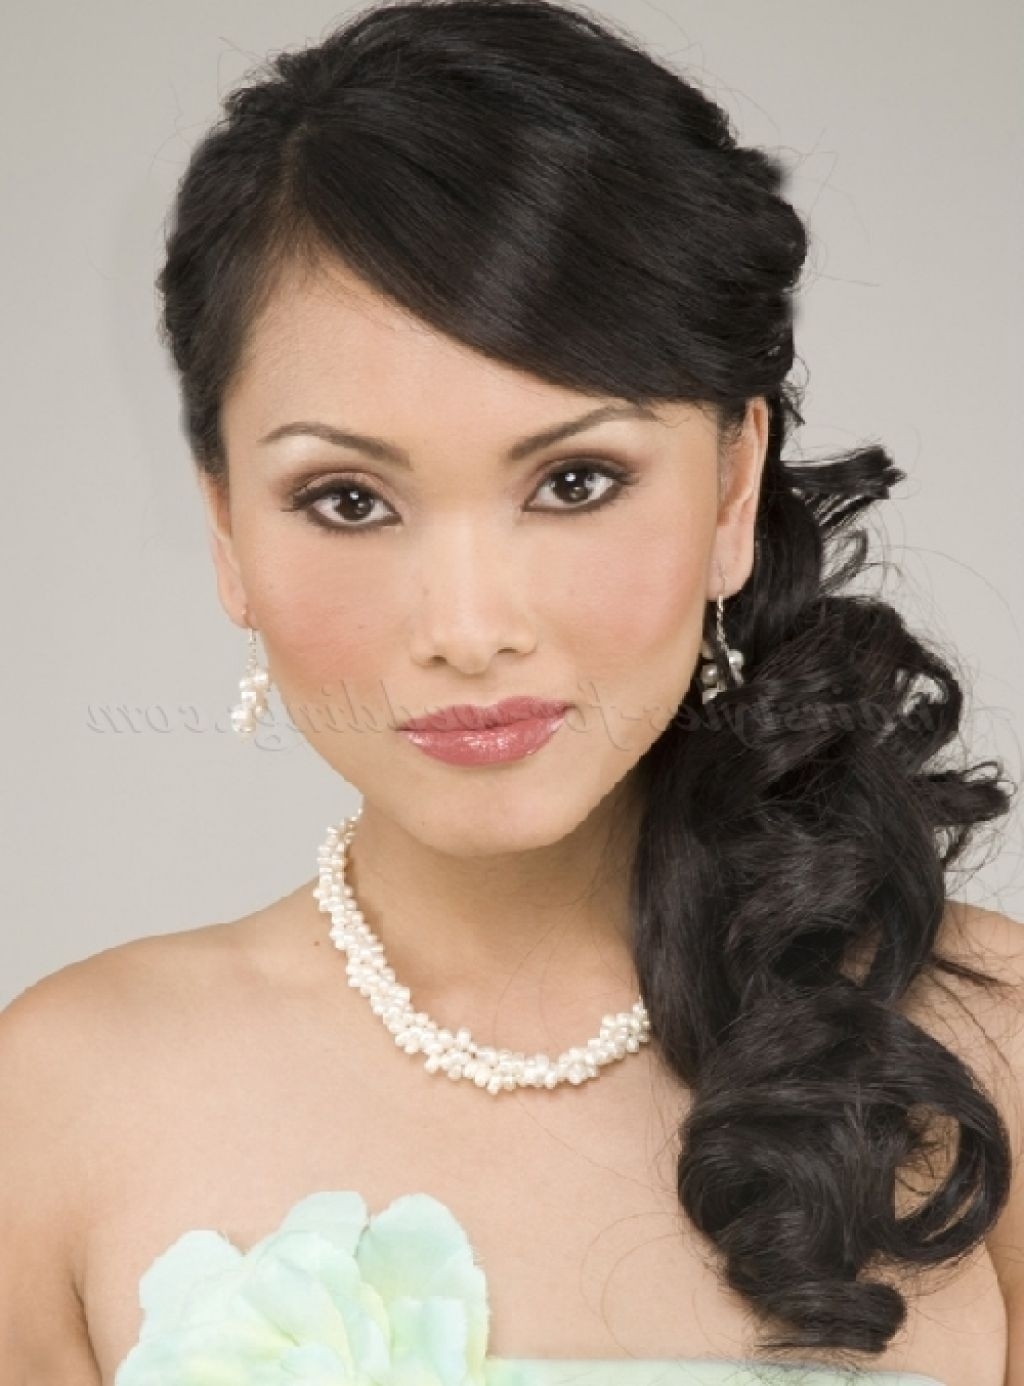 Hairstyles For Asian Weddings – Black Hair Collection | The Wedding in Asian Wedding Hairstyles For Long Hair